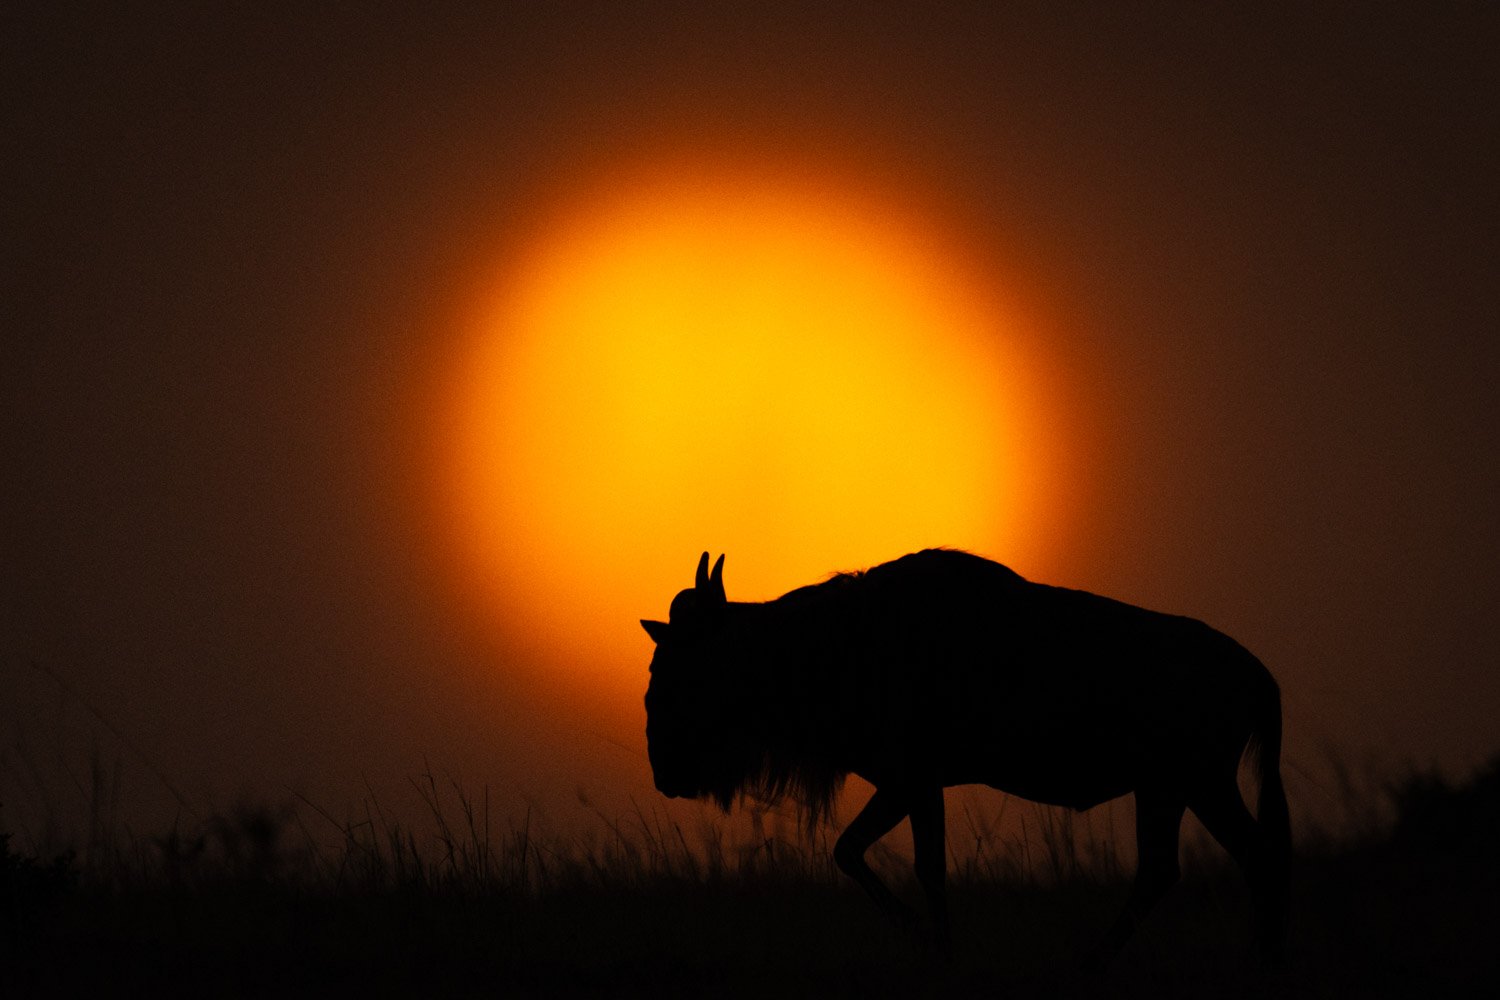 Blue wildebeest walks silhouetted against setting sun